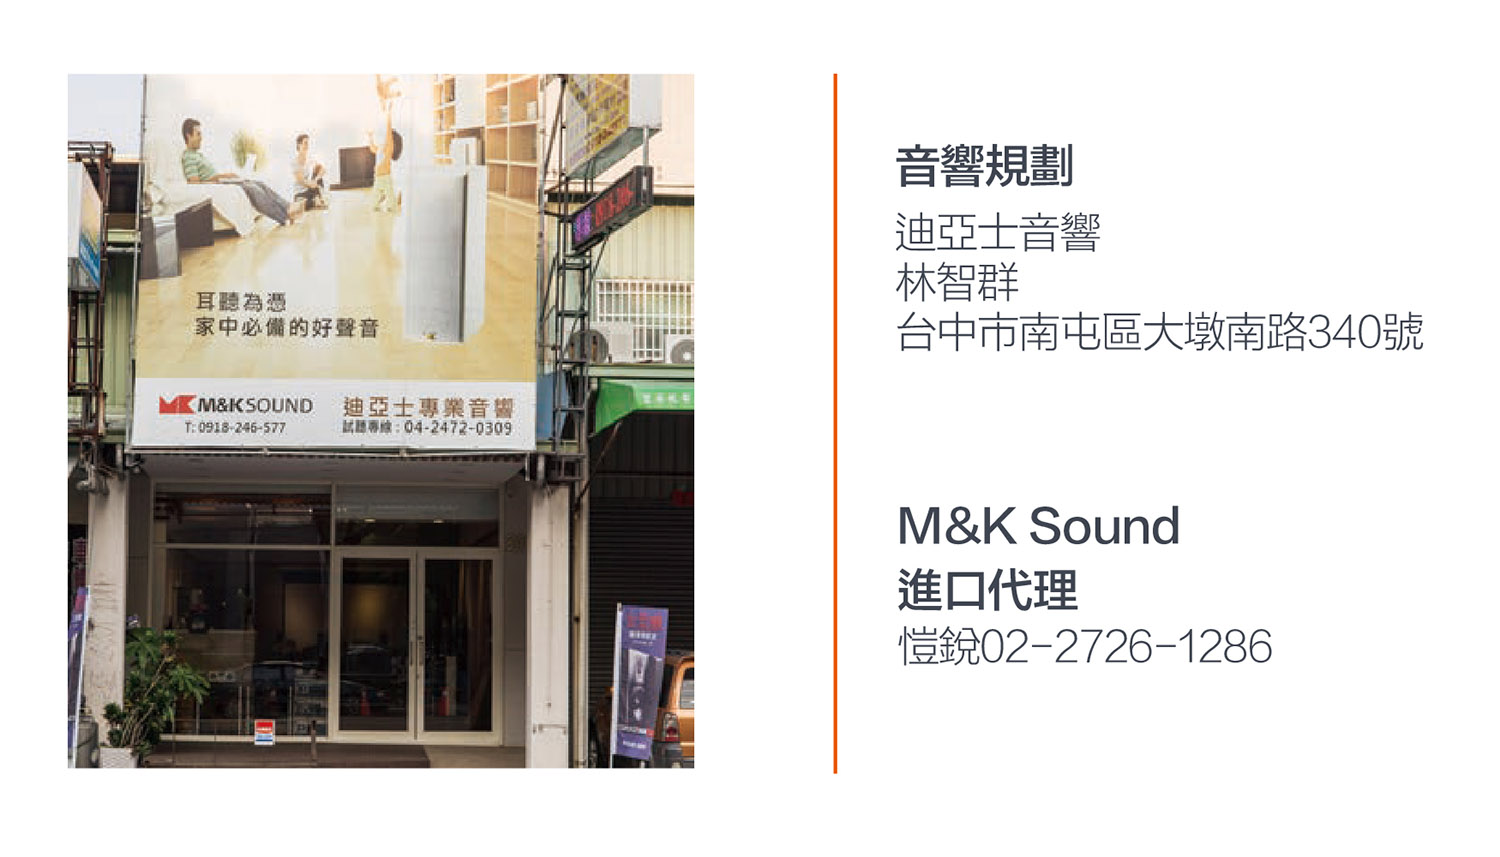 M&K SOUND 愷銳音響規劃